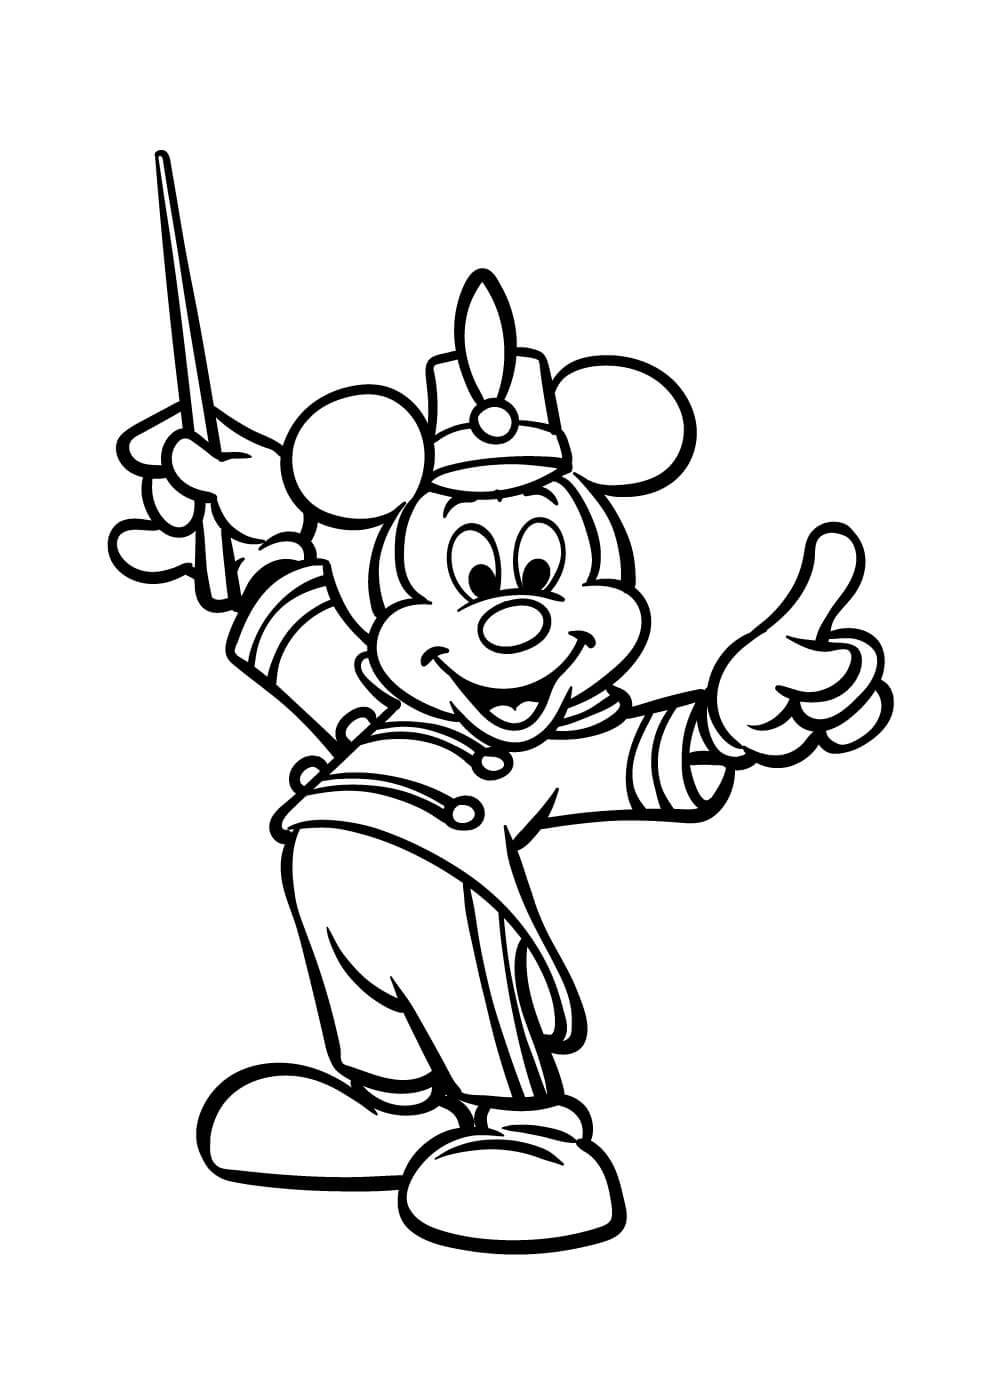 Gran Mickey Mouse